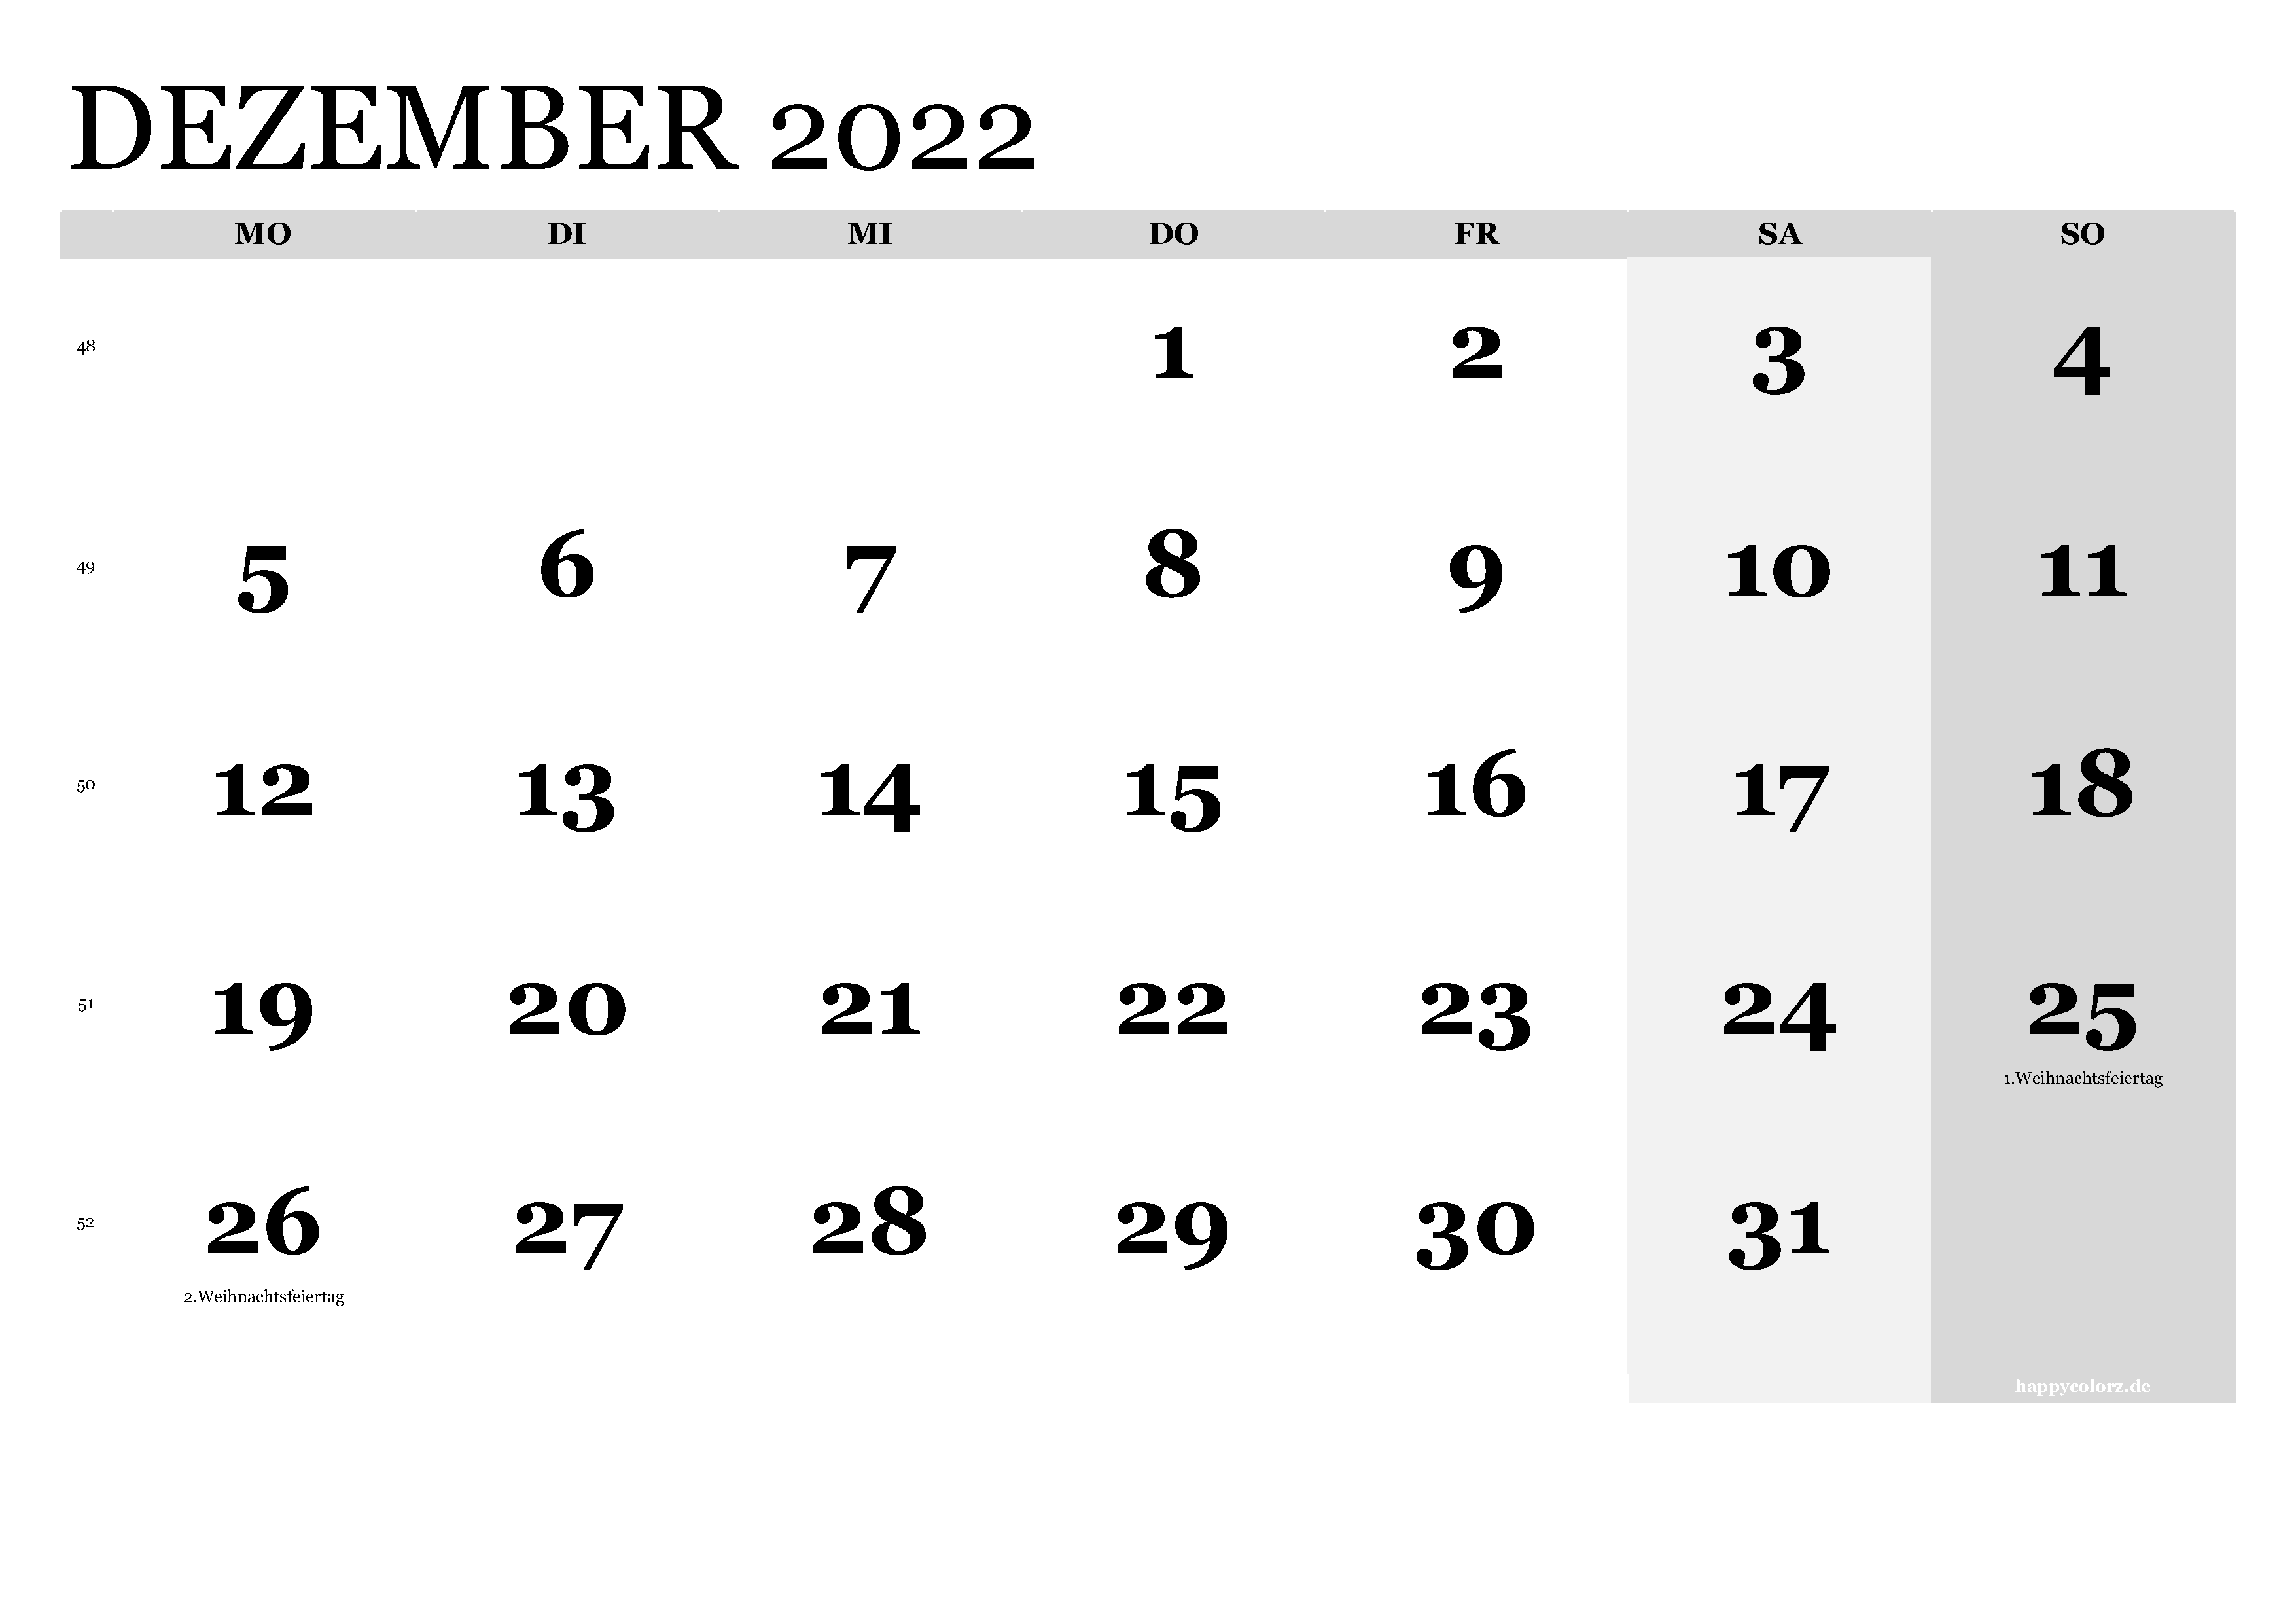 Dezember 2022 calendar printable